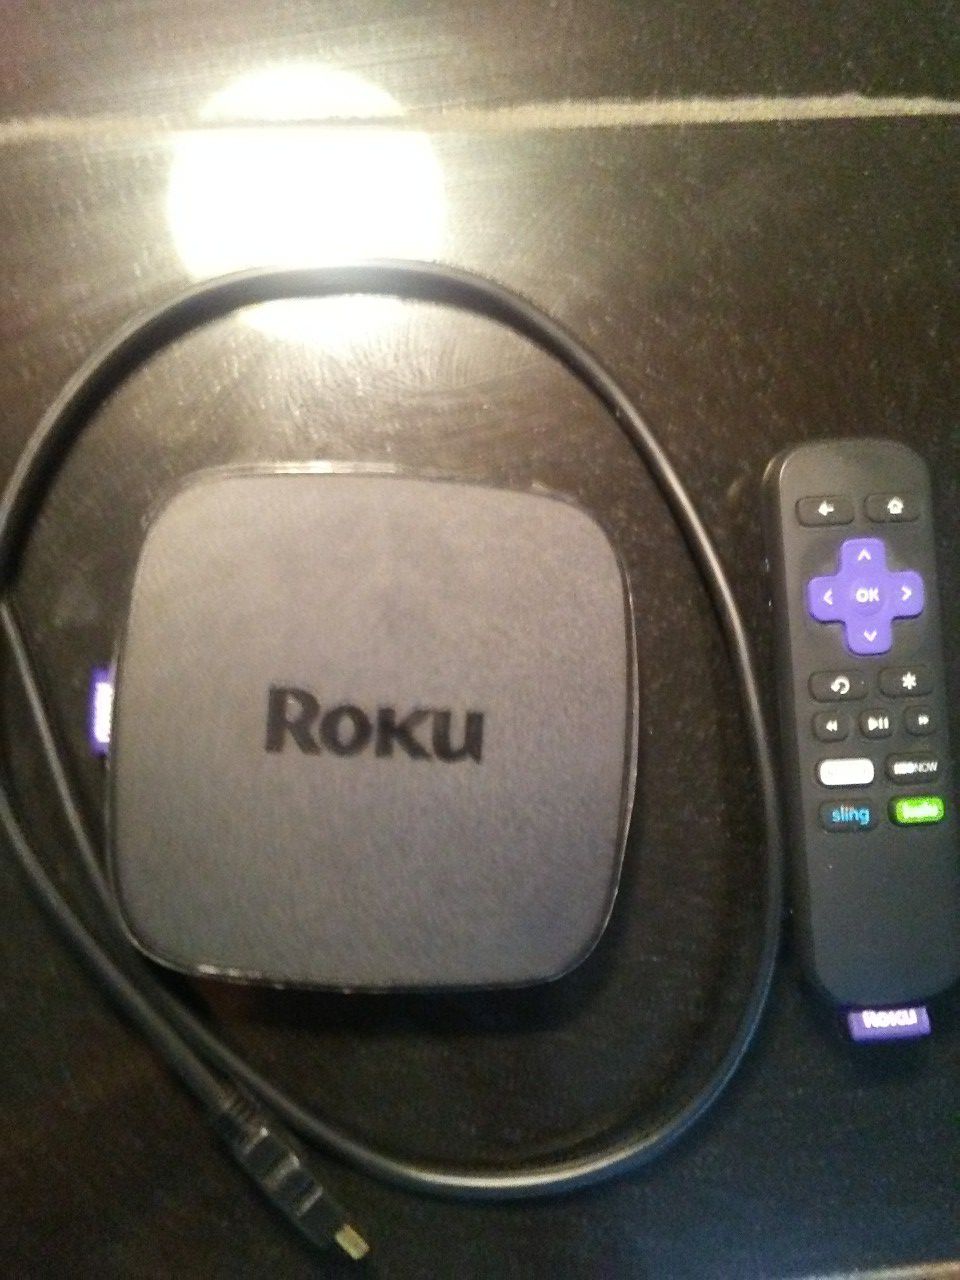 Never used Roku device